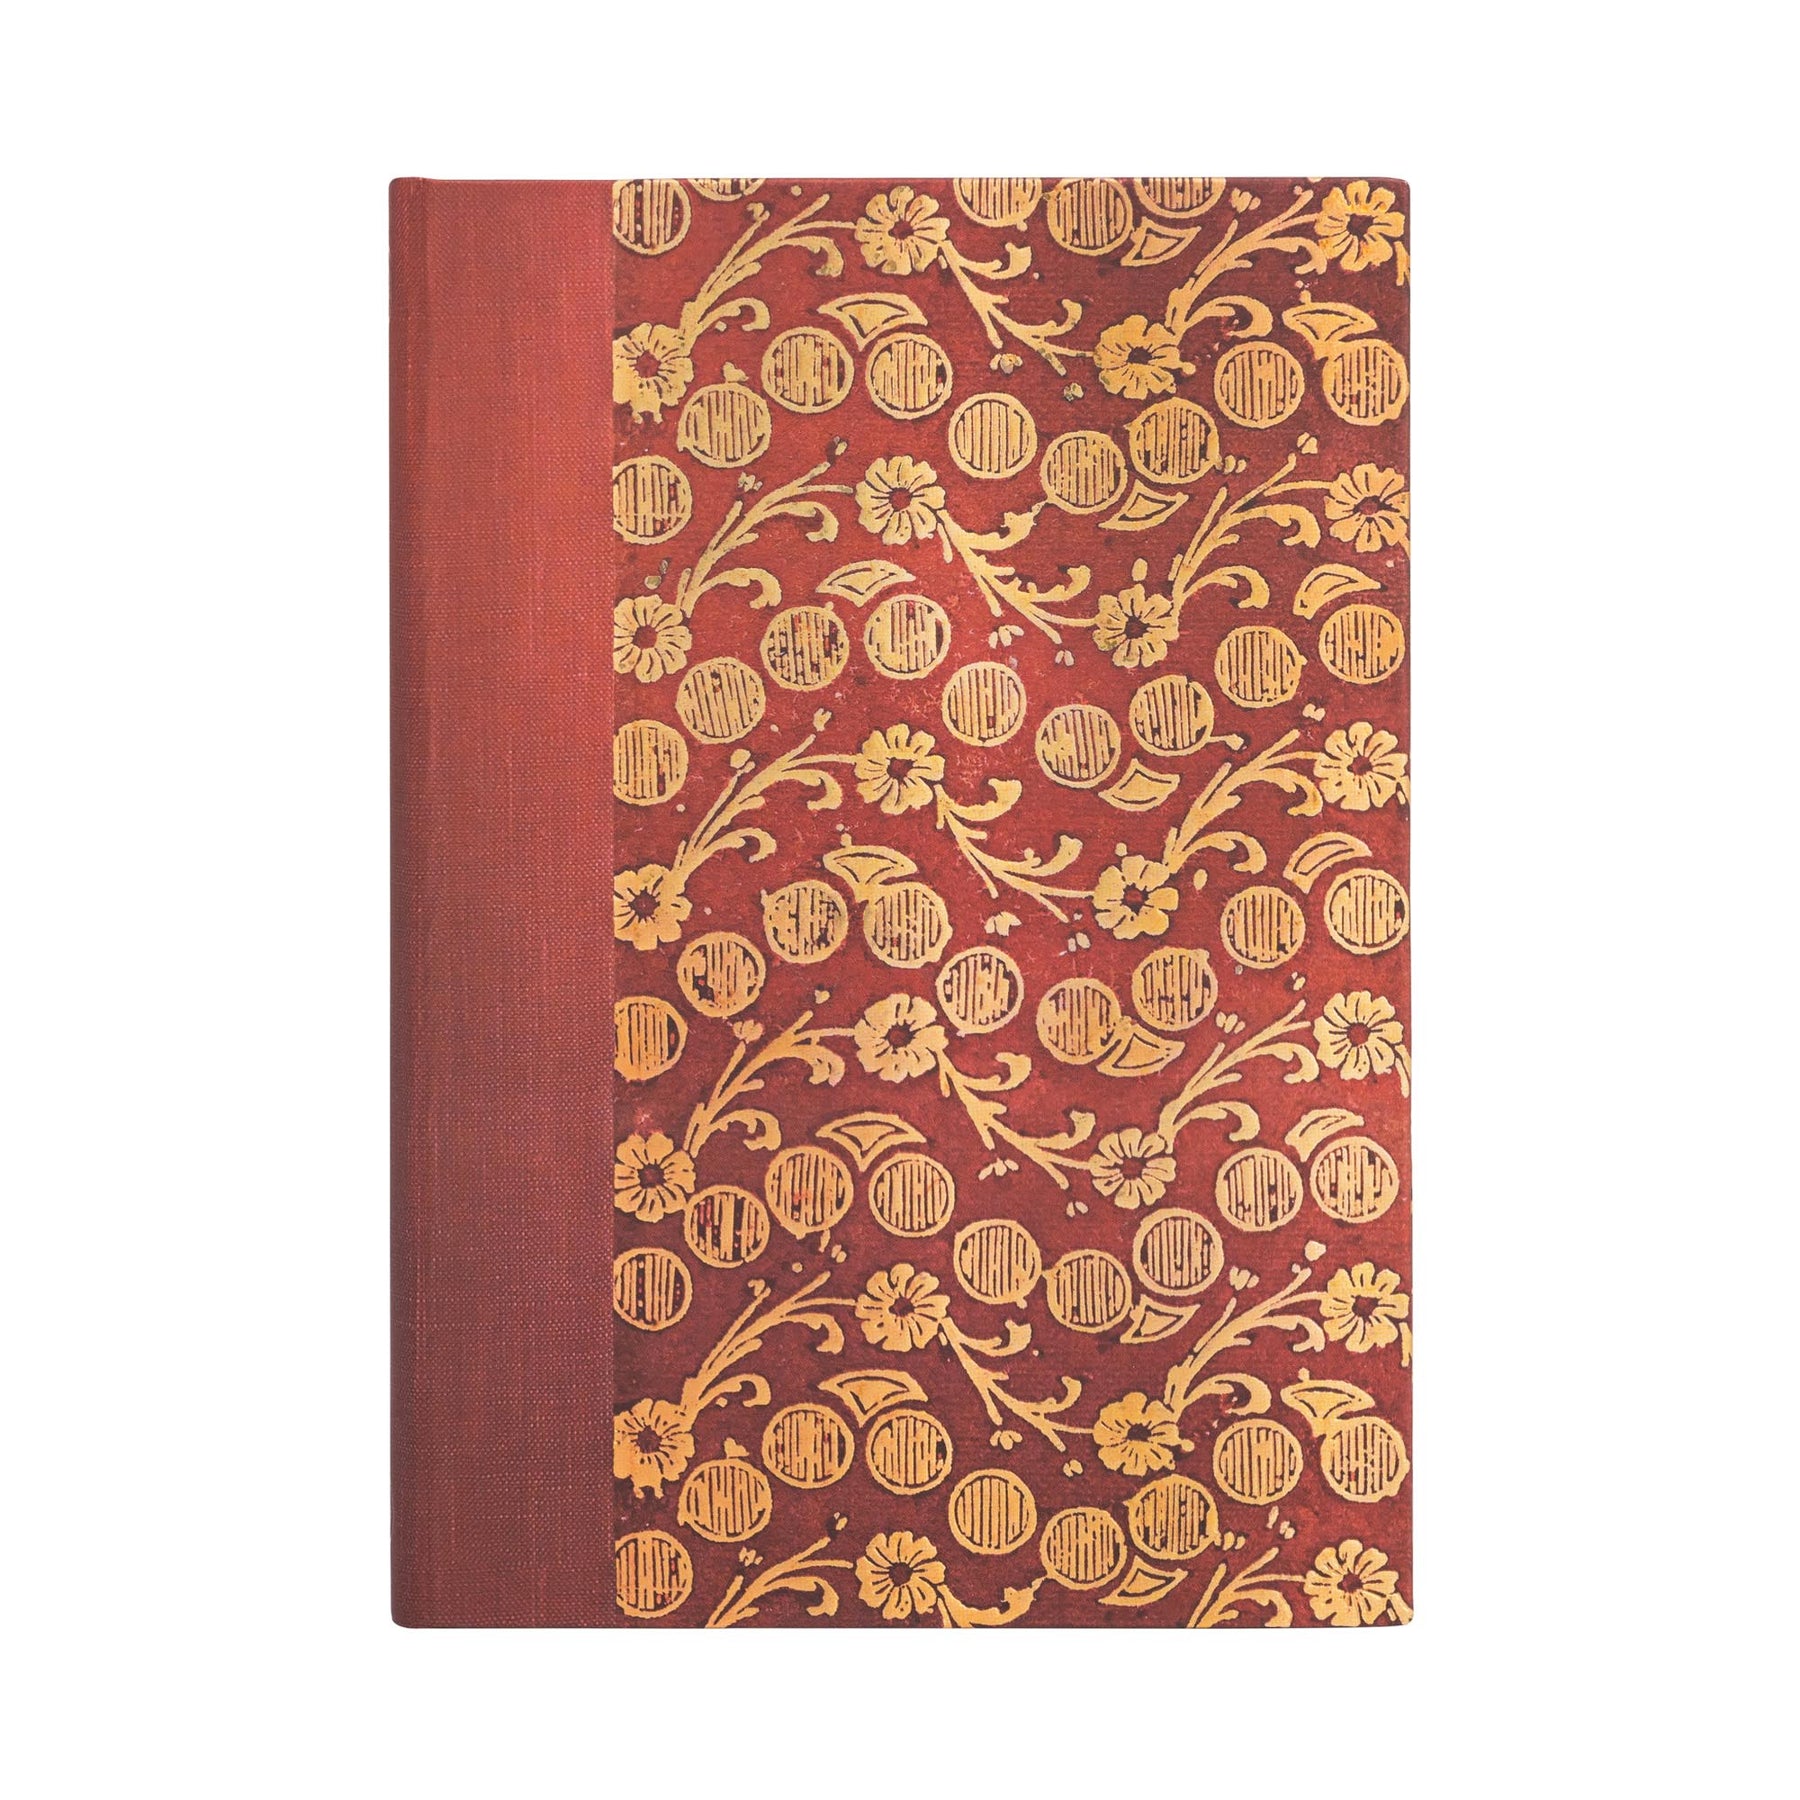 Paperblanks Virginia Woolf's Notebooks - The Waves (Volume 4) Midi